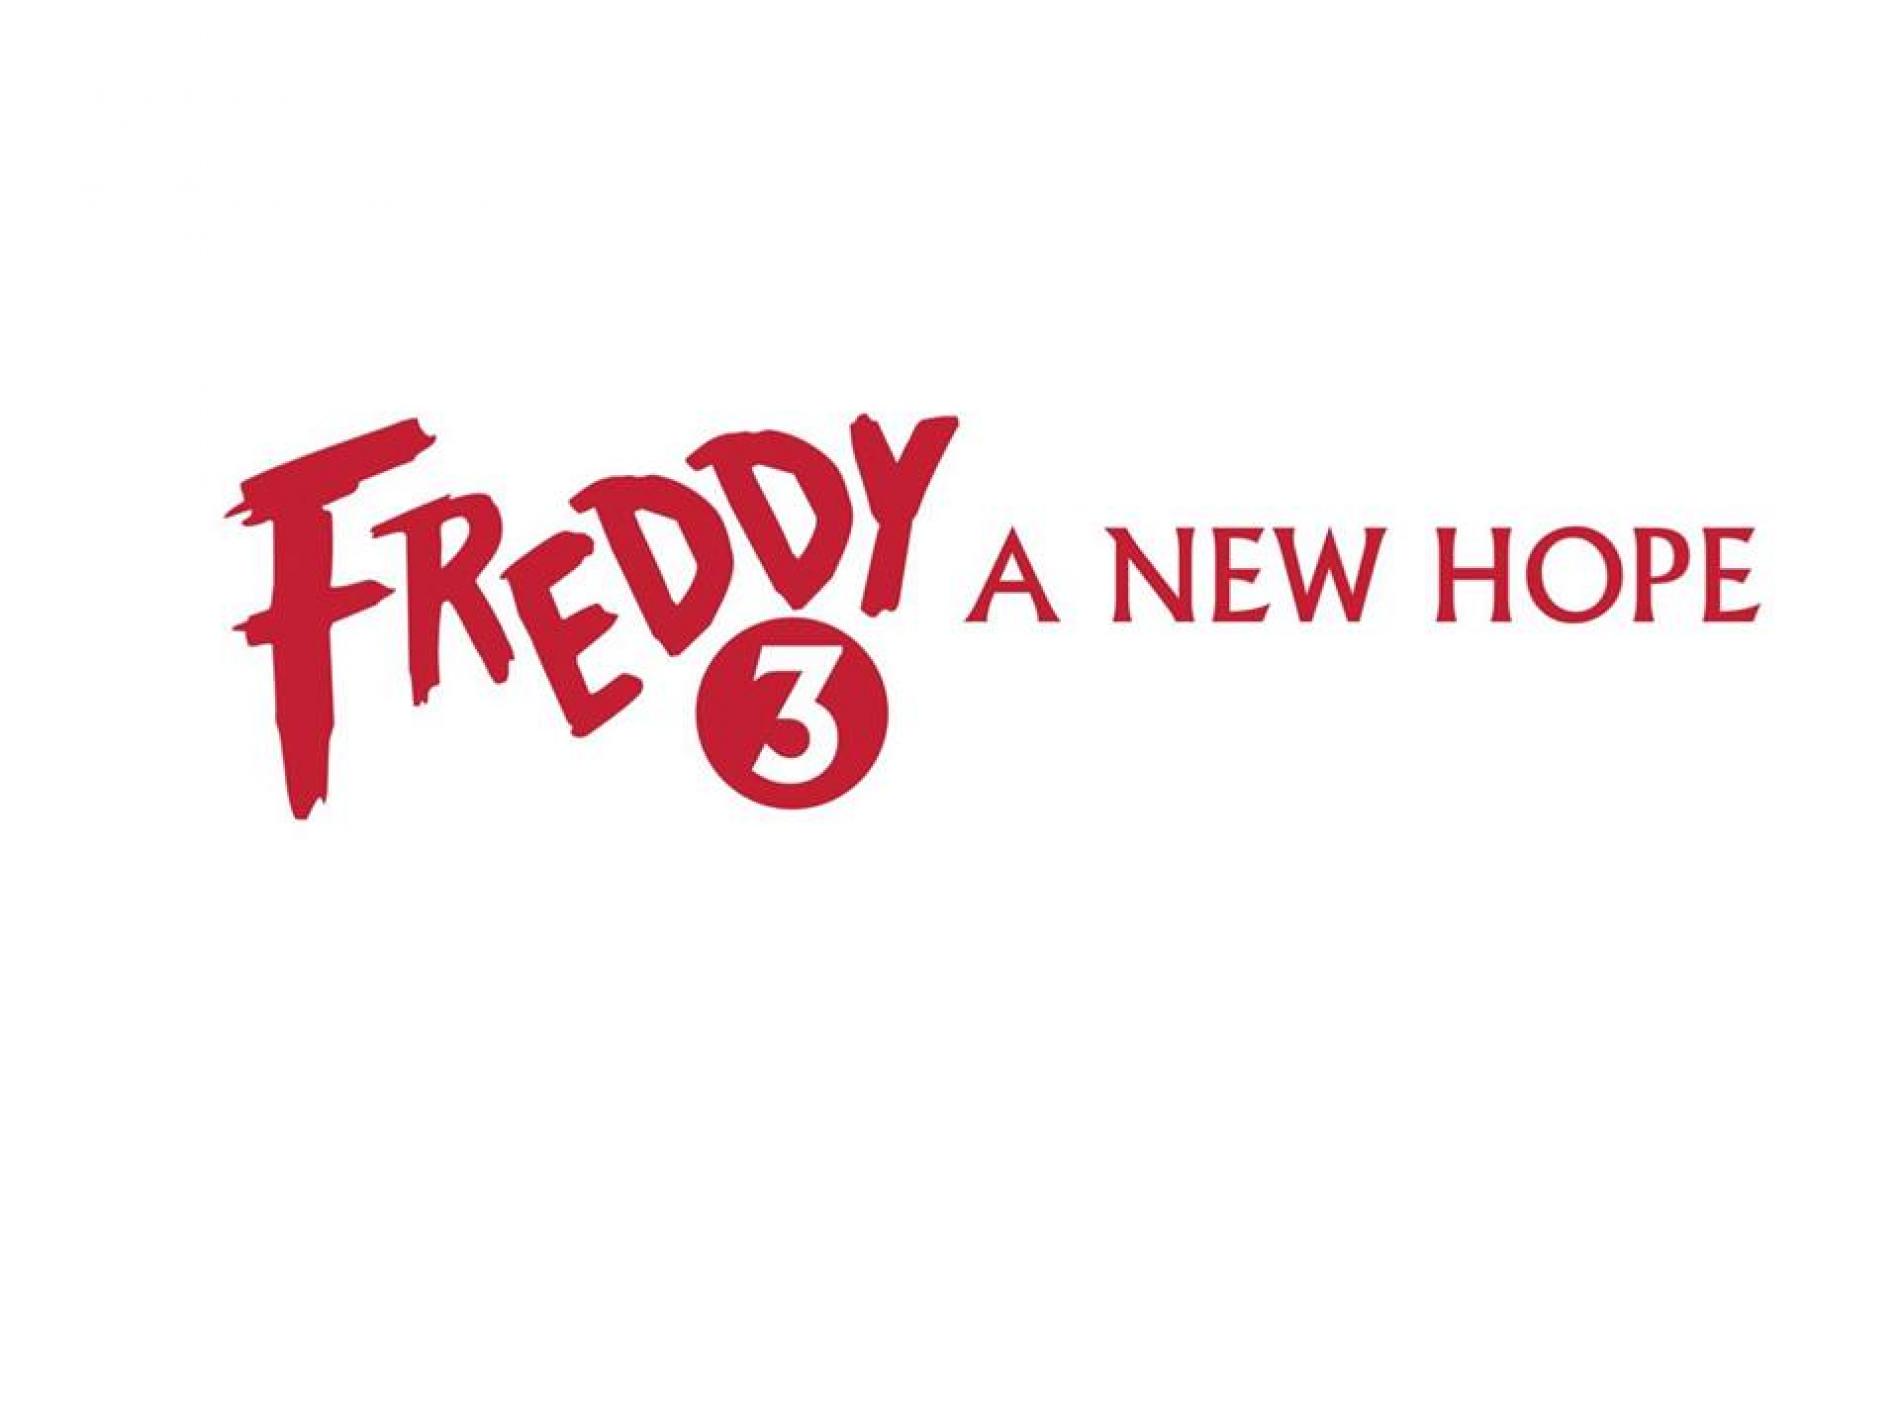 Freddy 3 – A New Hope!